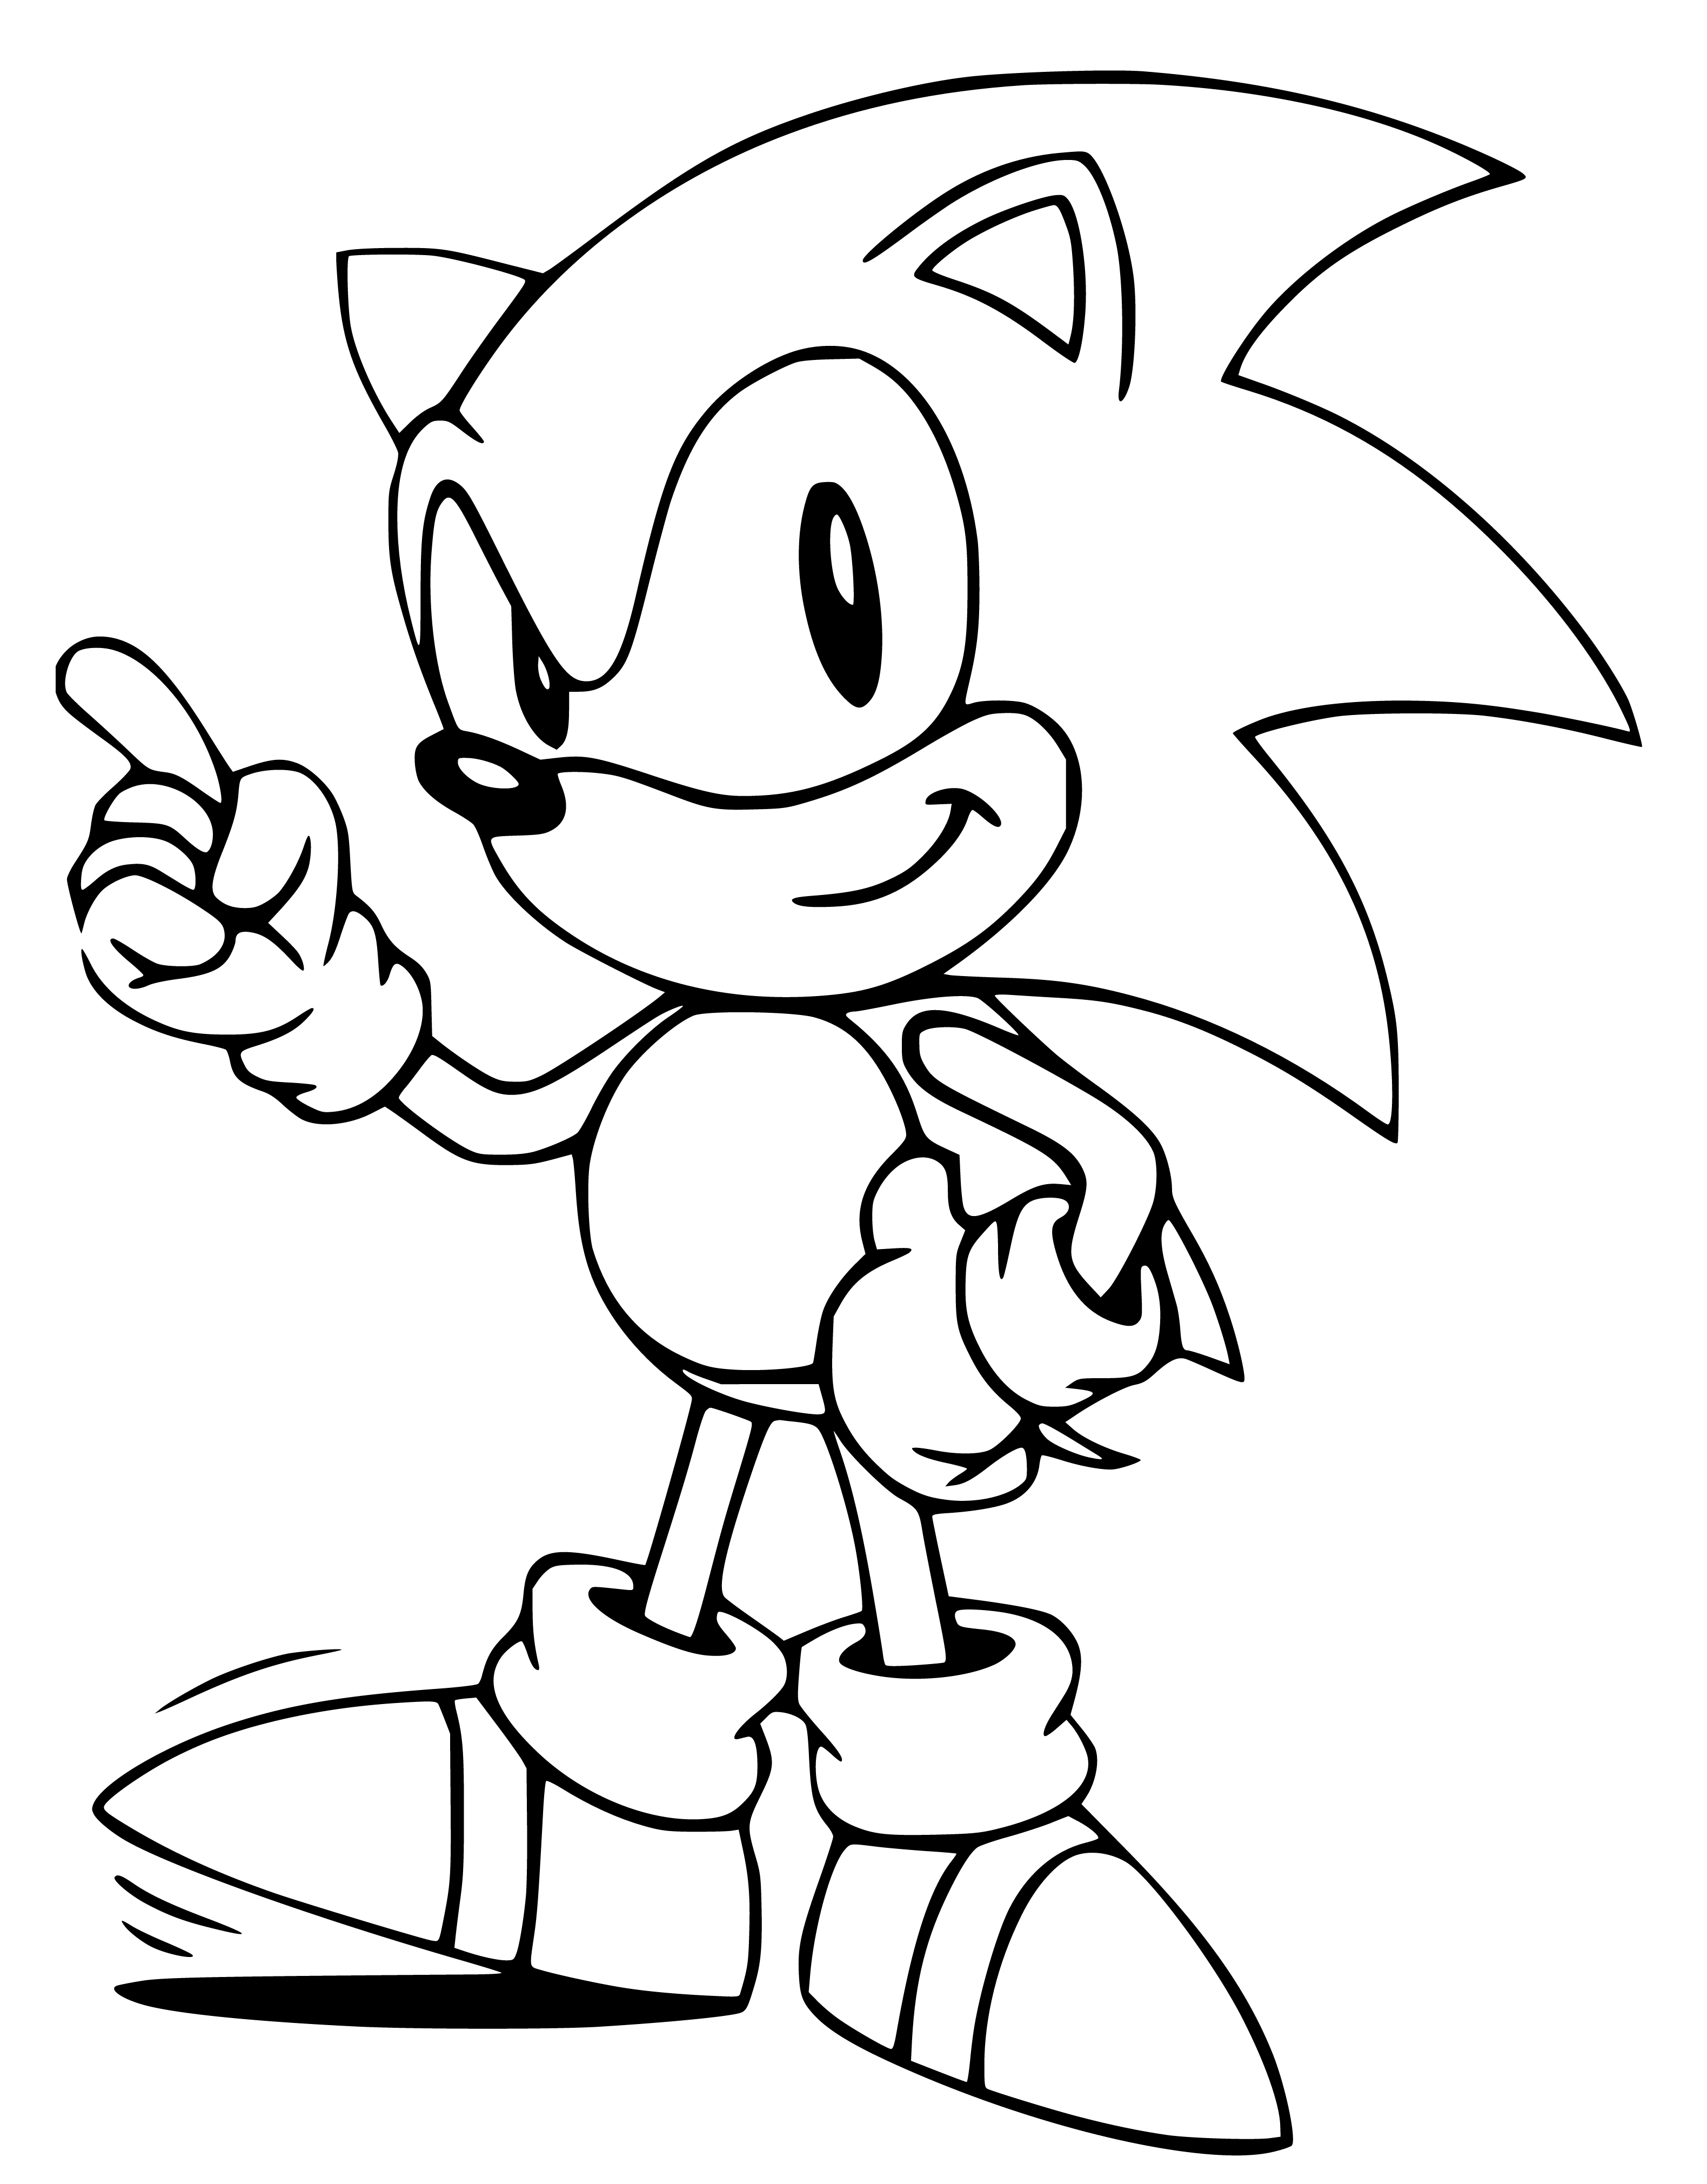 Sonic the Hedgehog Coloring Page for Kids Printable - SheetalColor.com